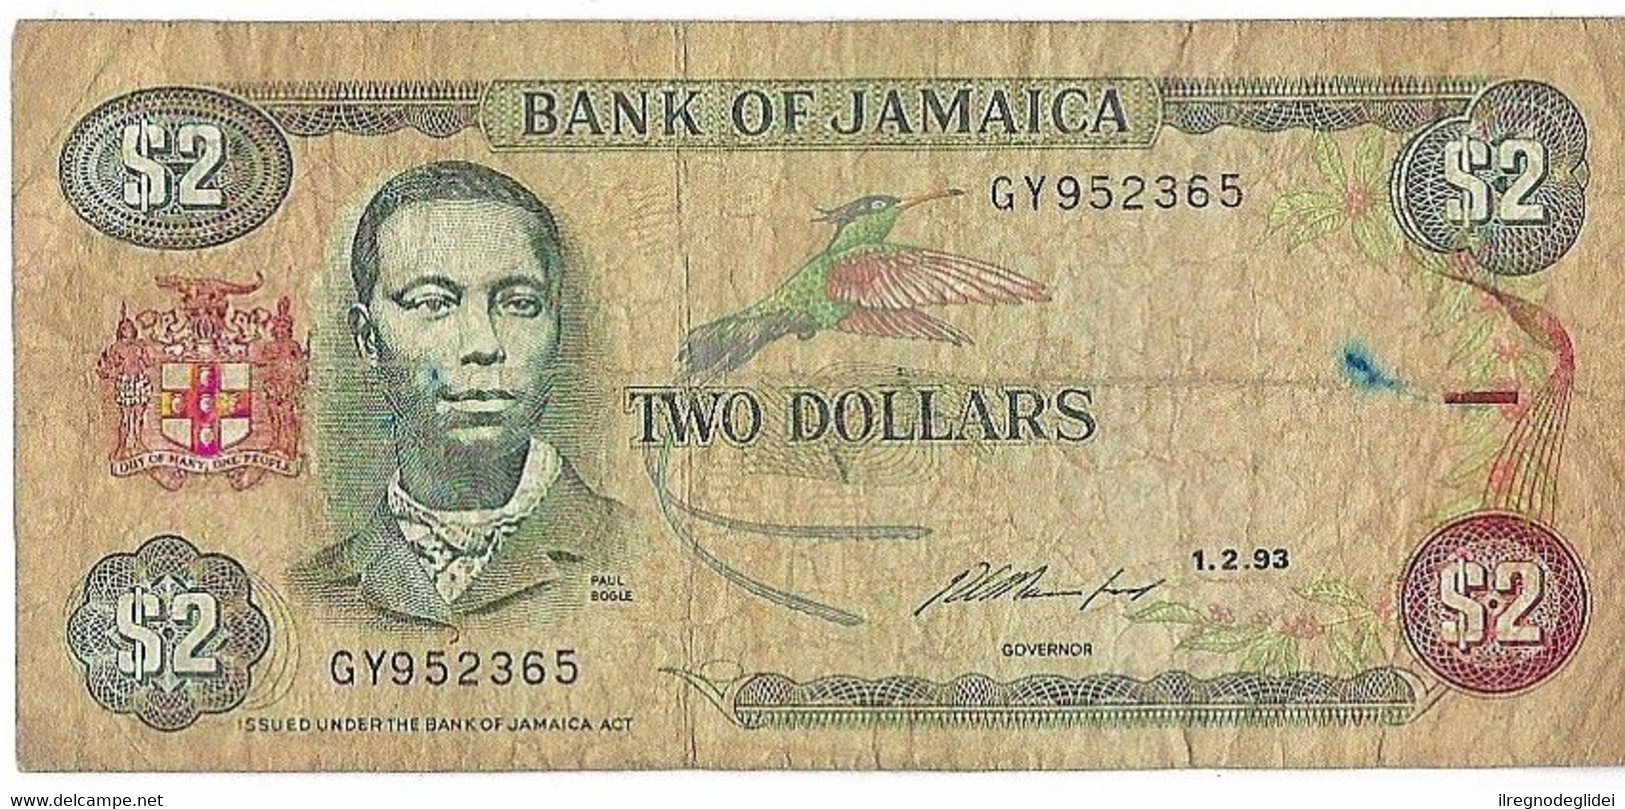 JAMAICA - GIAMAICA  $2 2 DOLLARI - WYSIWYG   - N° SERIALE GY952365 - CARTAMONETA - PAPER MONEY - Jamaica